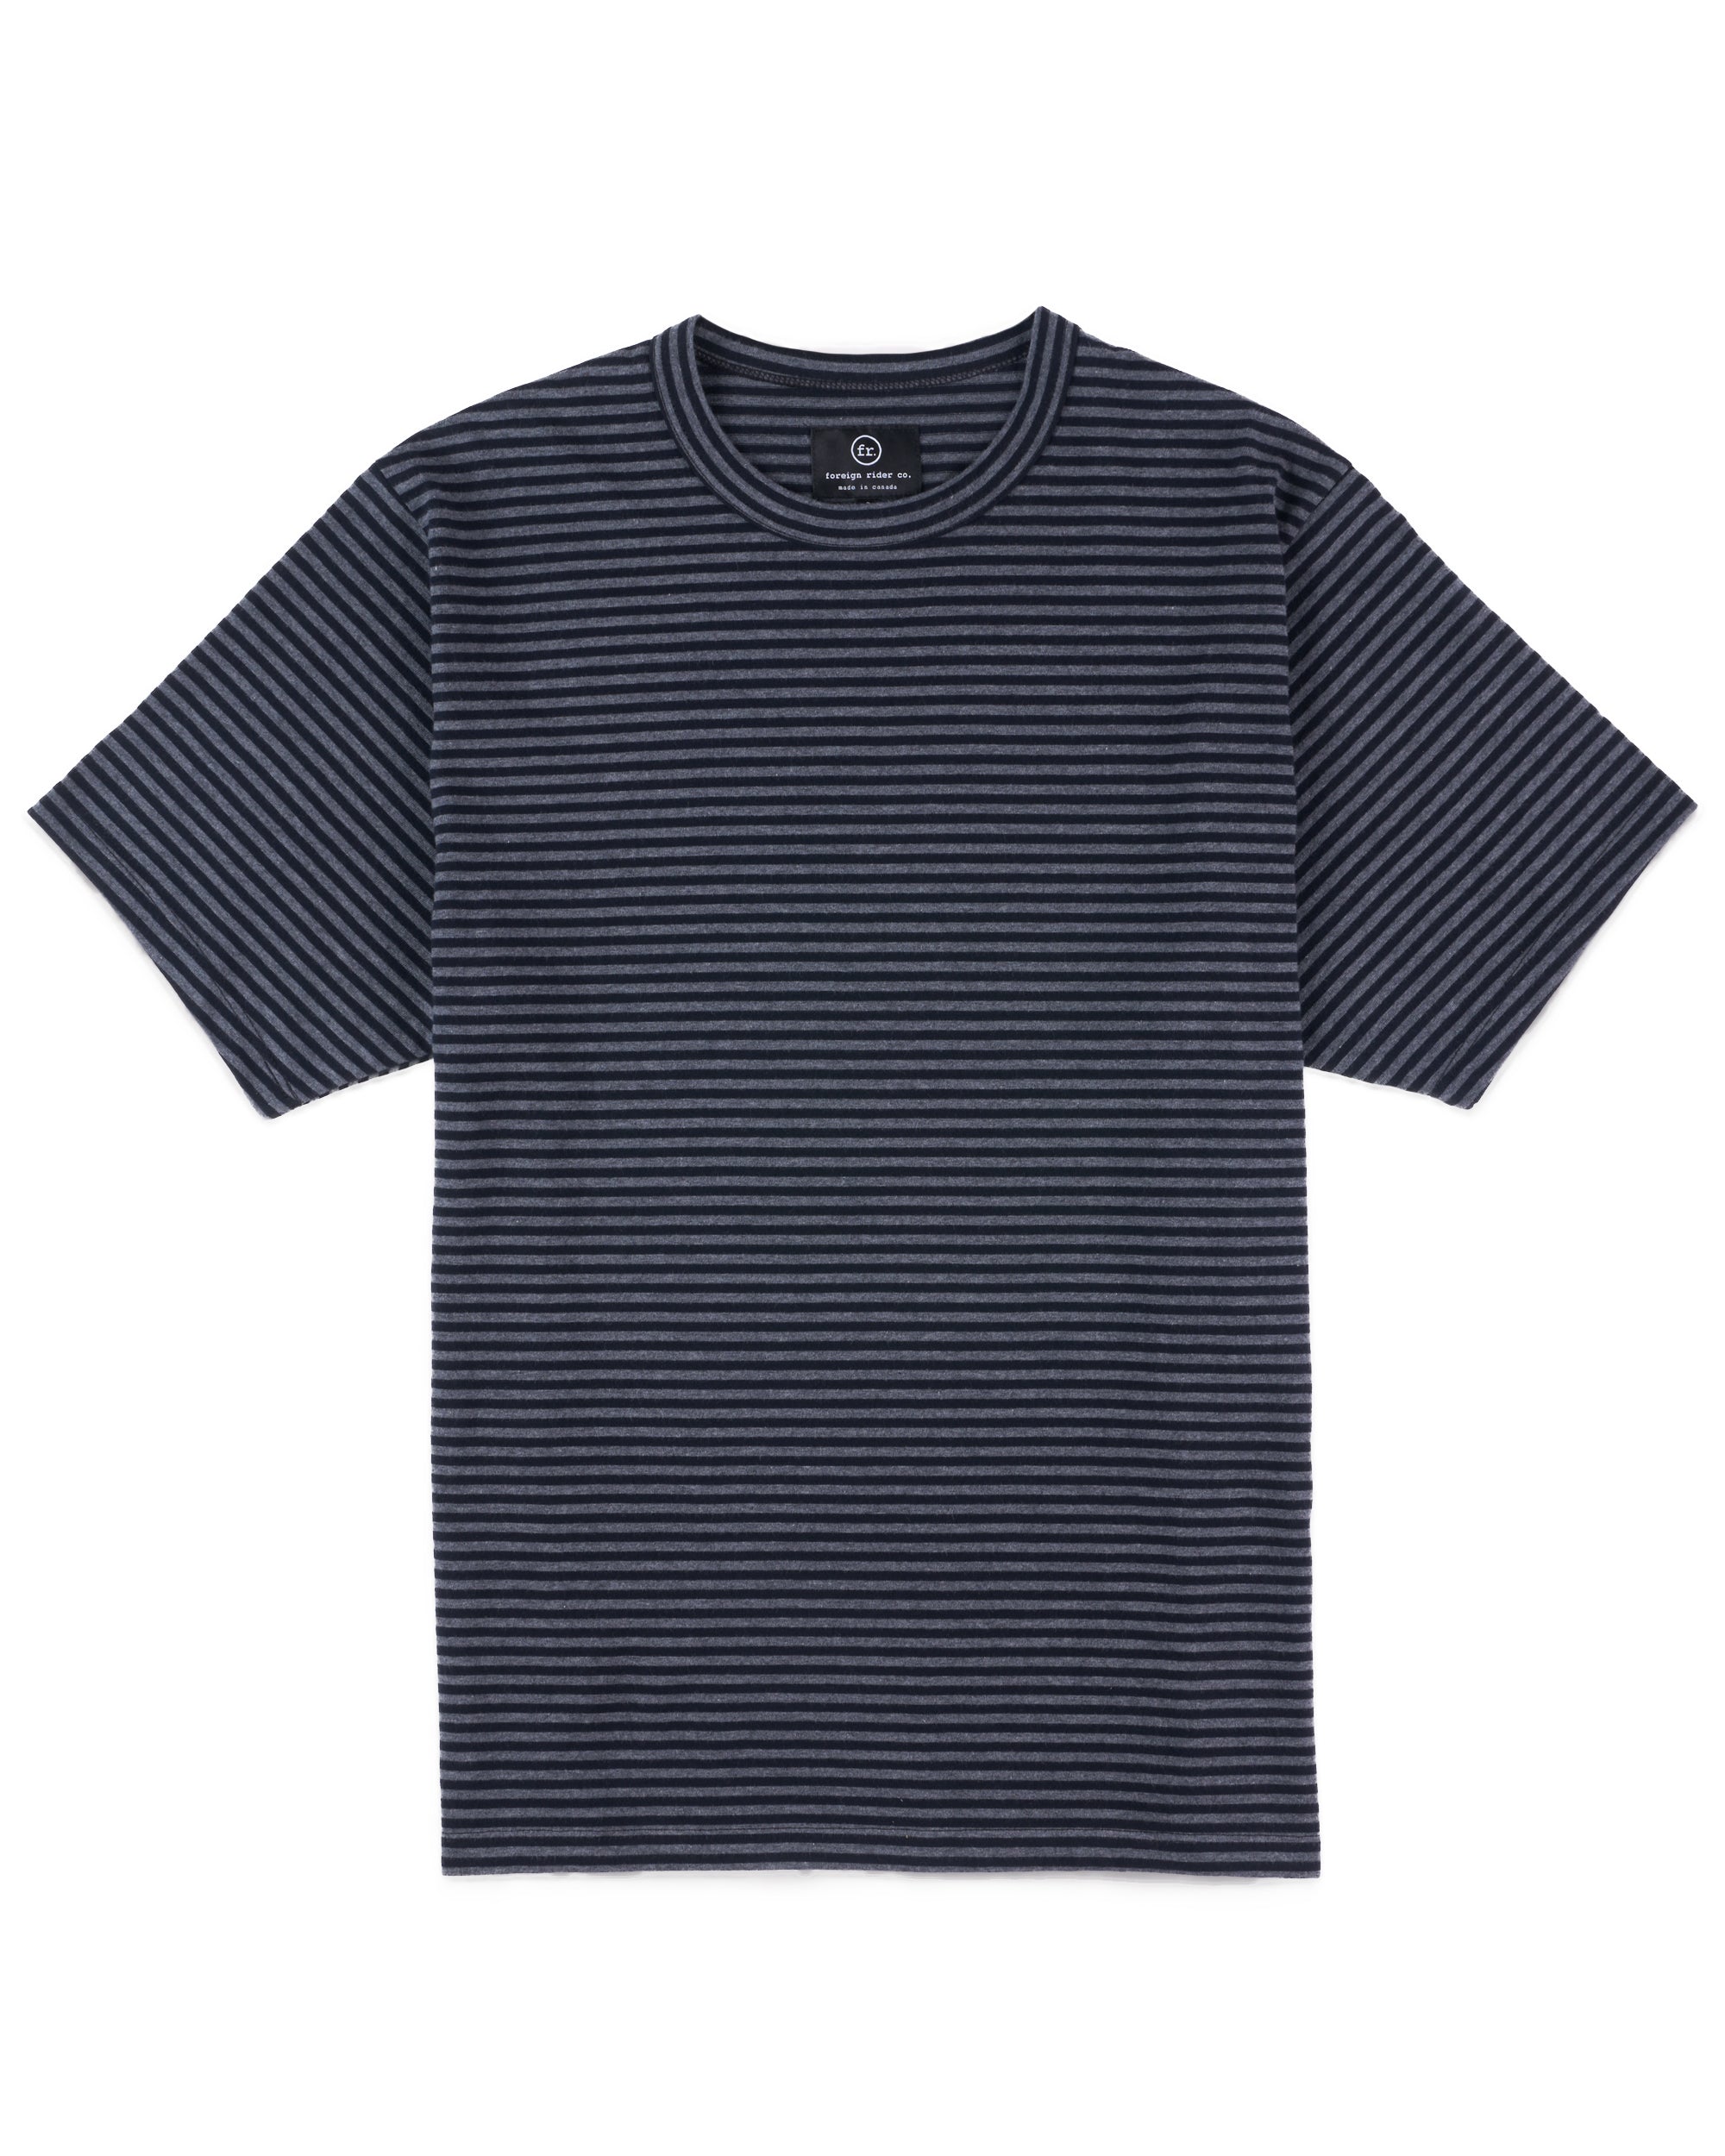 Vintage Stripe T-Shirt Black / Grey - Foreign Rider Co.